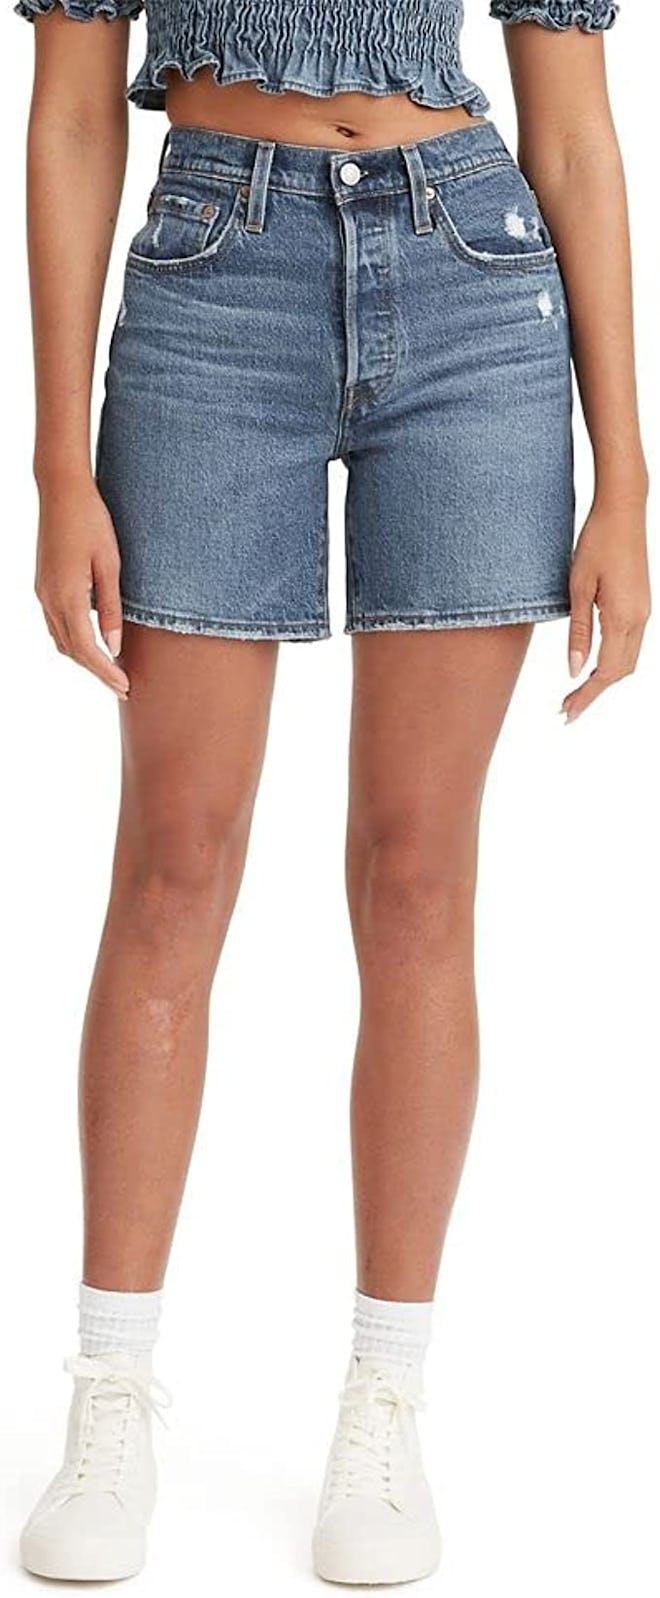 Best Mid-Length High-Waisted Jean Shorts